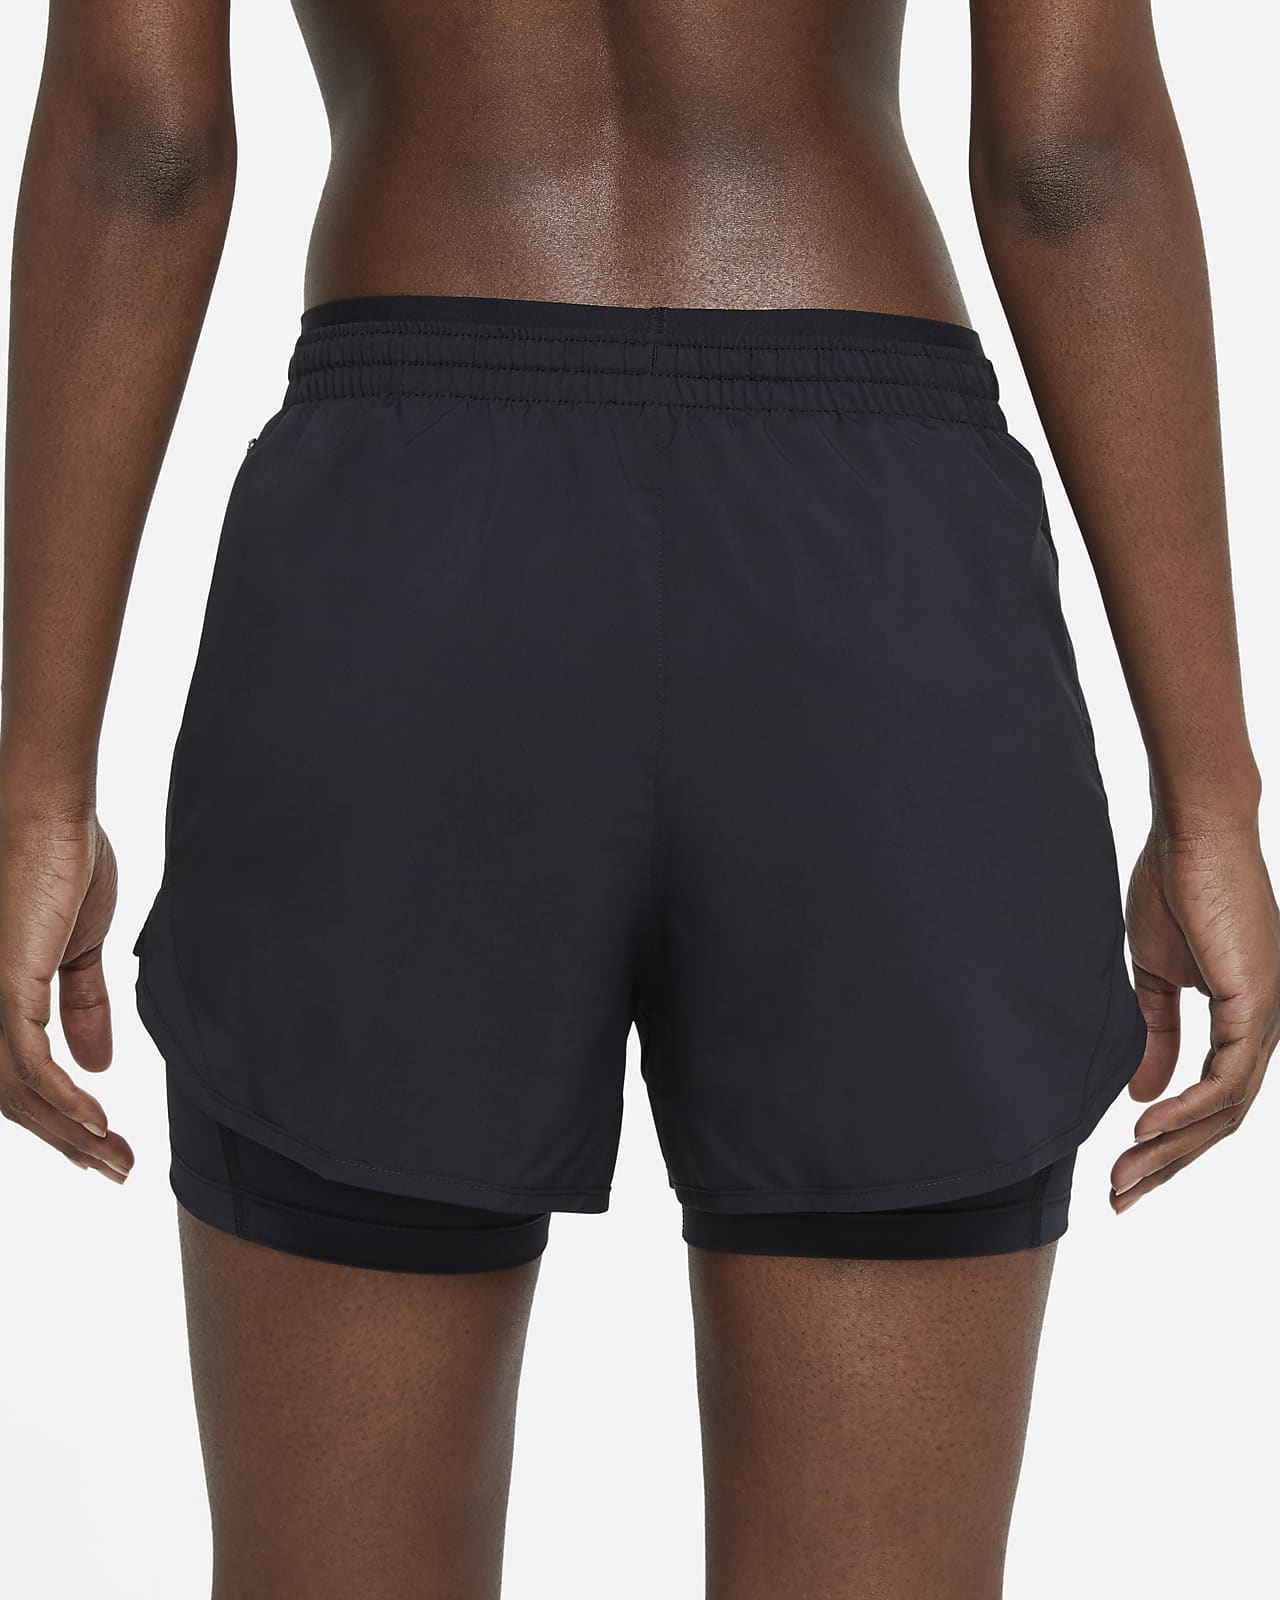 Womens NIKE Tempo shorts PLUS Size 2x 2xl xxl 20 22 black purple